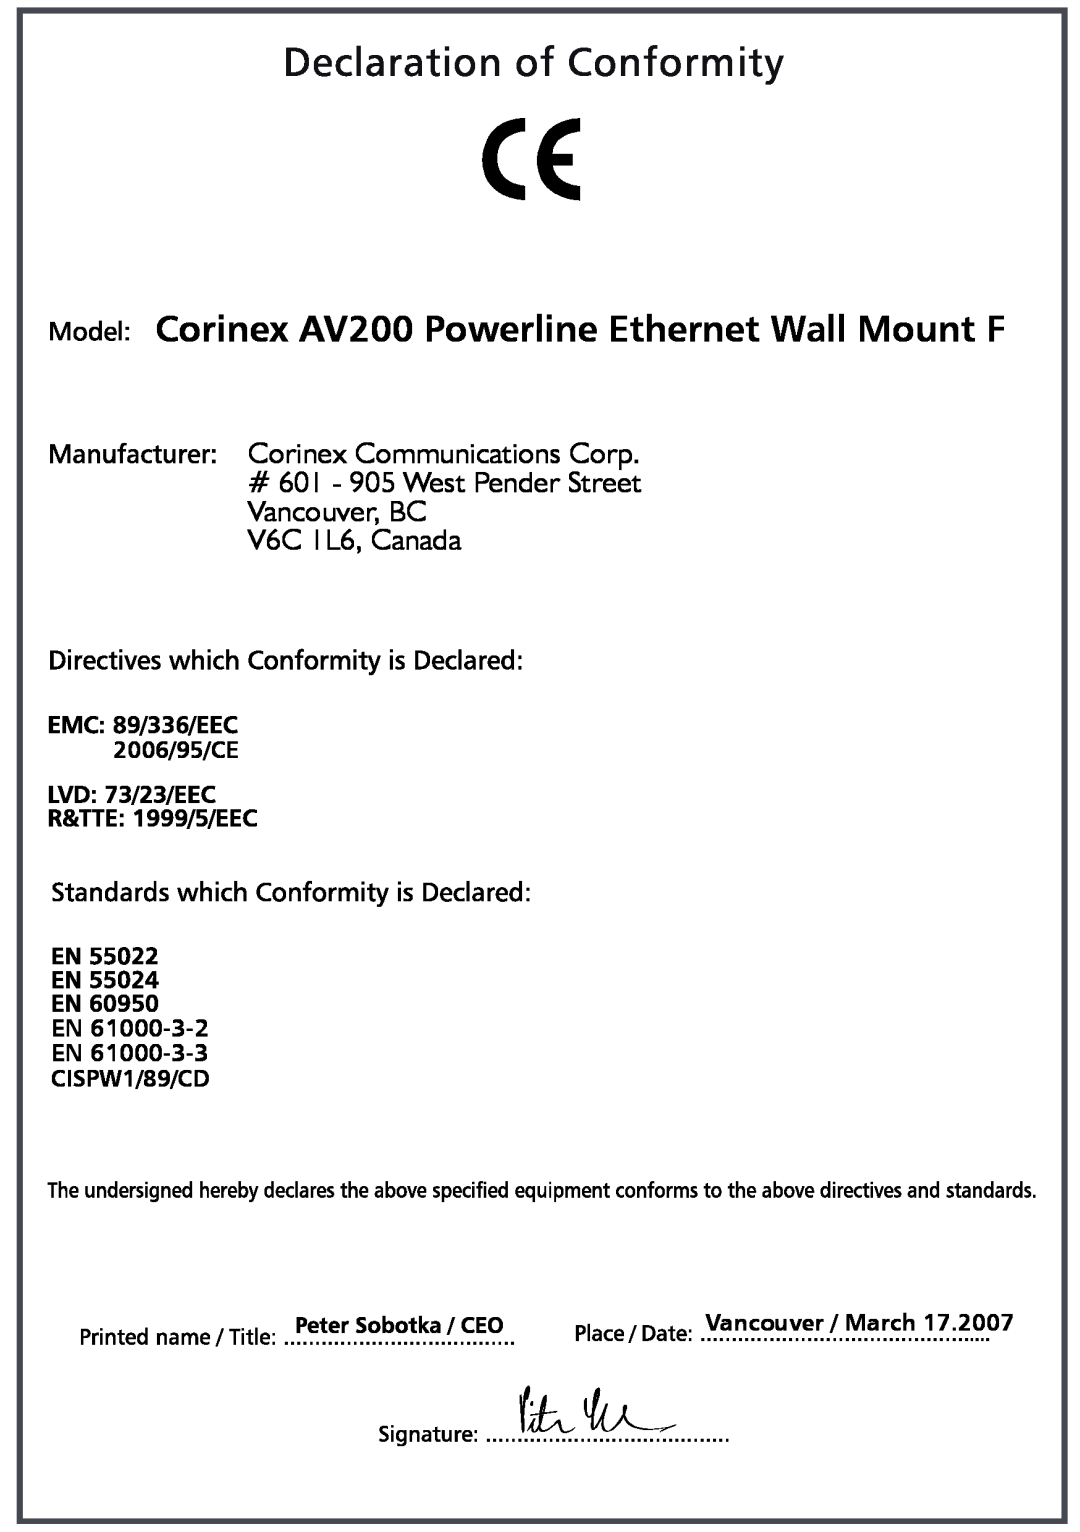 Corinex Global GameNet En En, Corinex AV200 Powerline Ethernet Wall Mount F, Vancouver, BC V6C 1L6, Canada, 2006/95/CE 